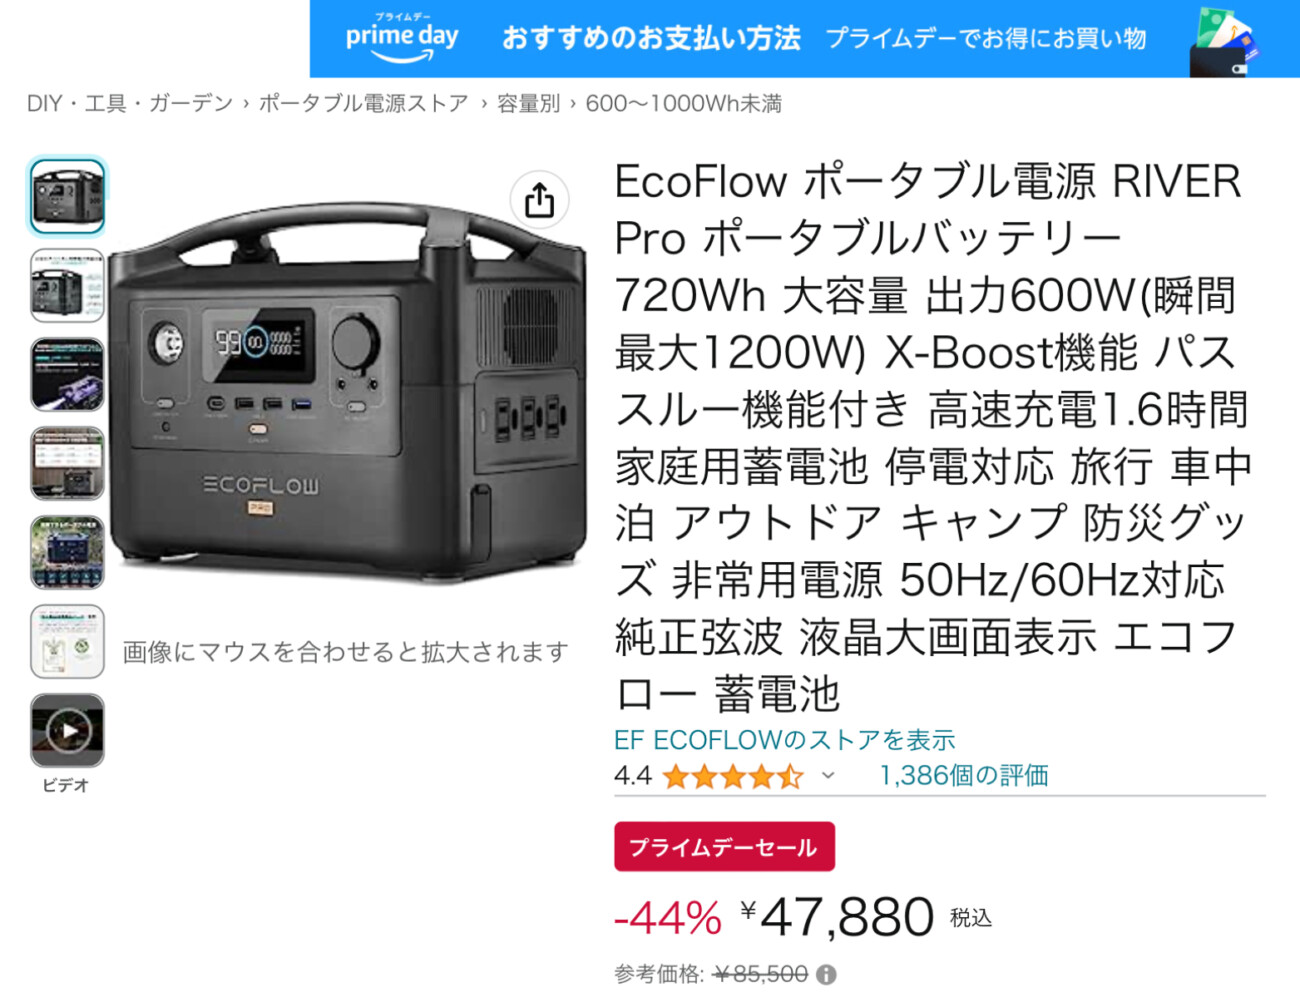 EcoFlow RIVER Pro 大容量ポータブルバッテリー 720Wh レビューや 